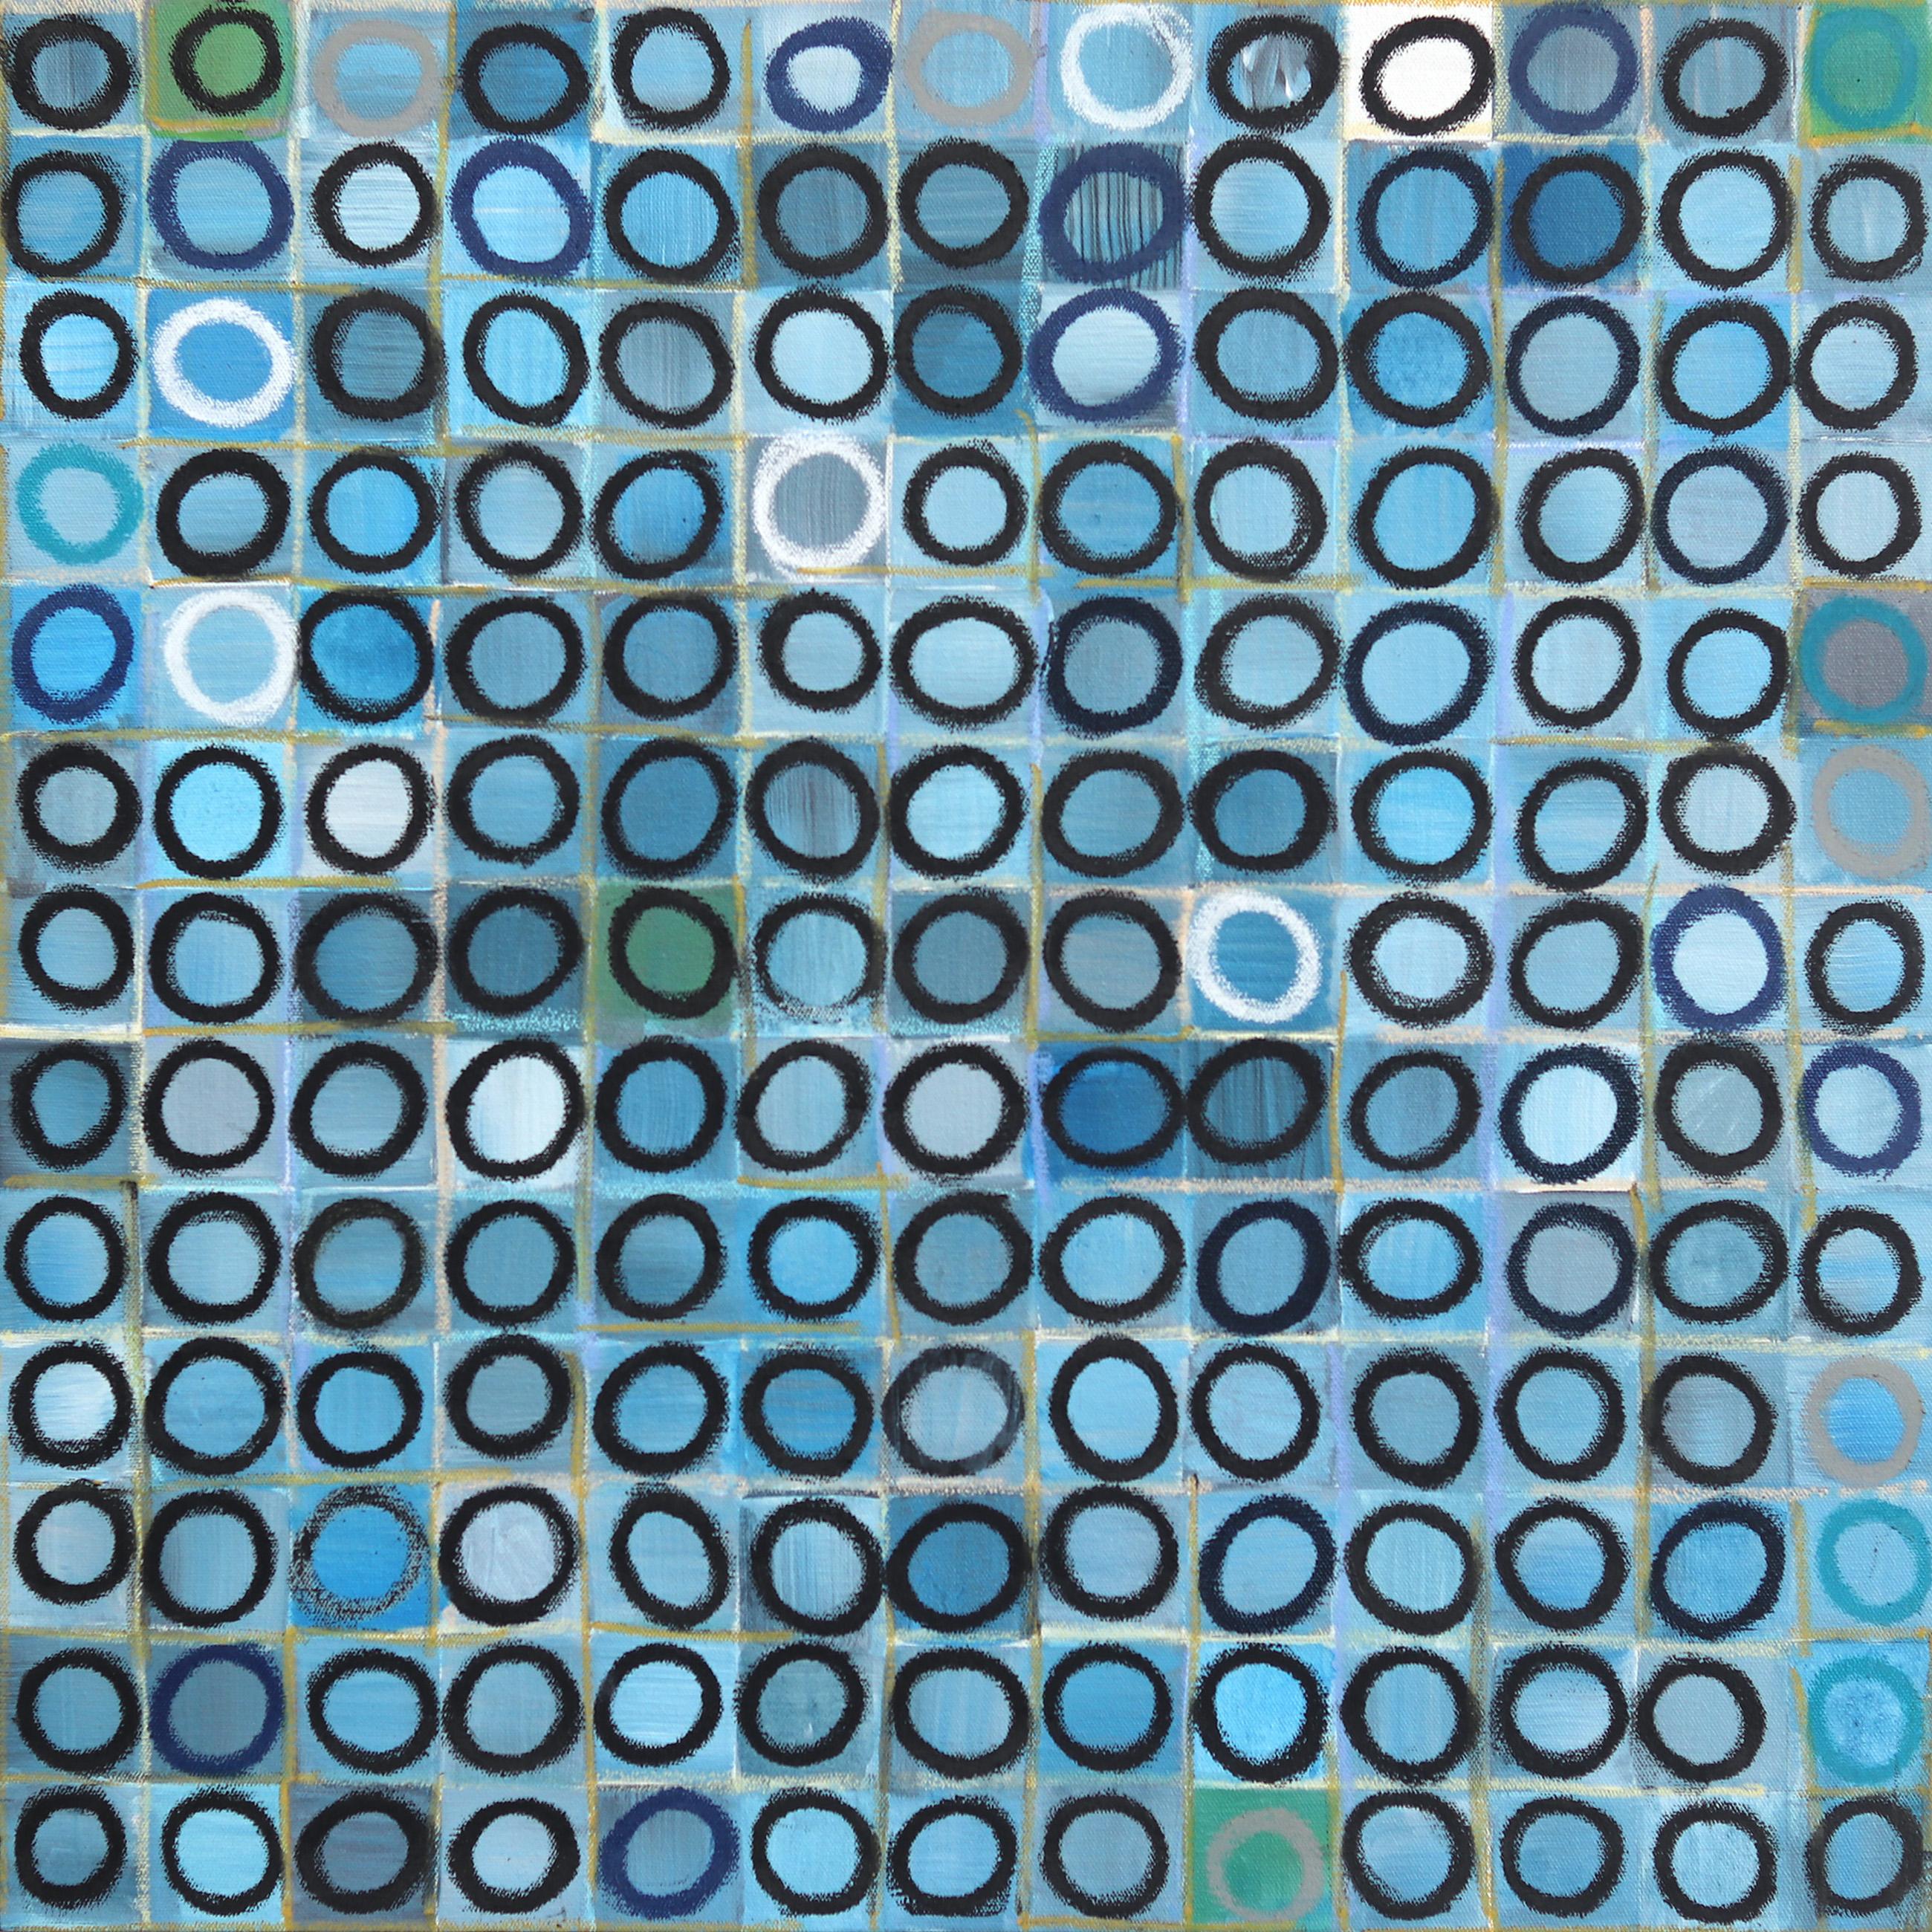 Brandon Neher Abstract Painting - 169 Circles - Abstract Geometric Original Painting